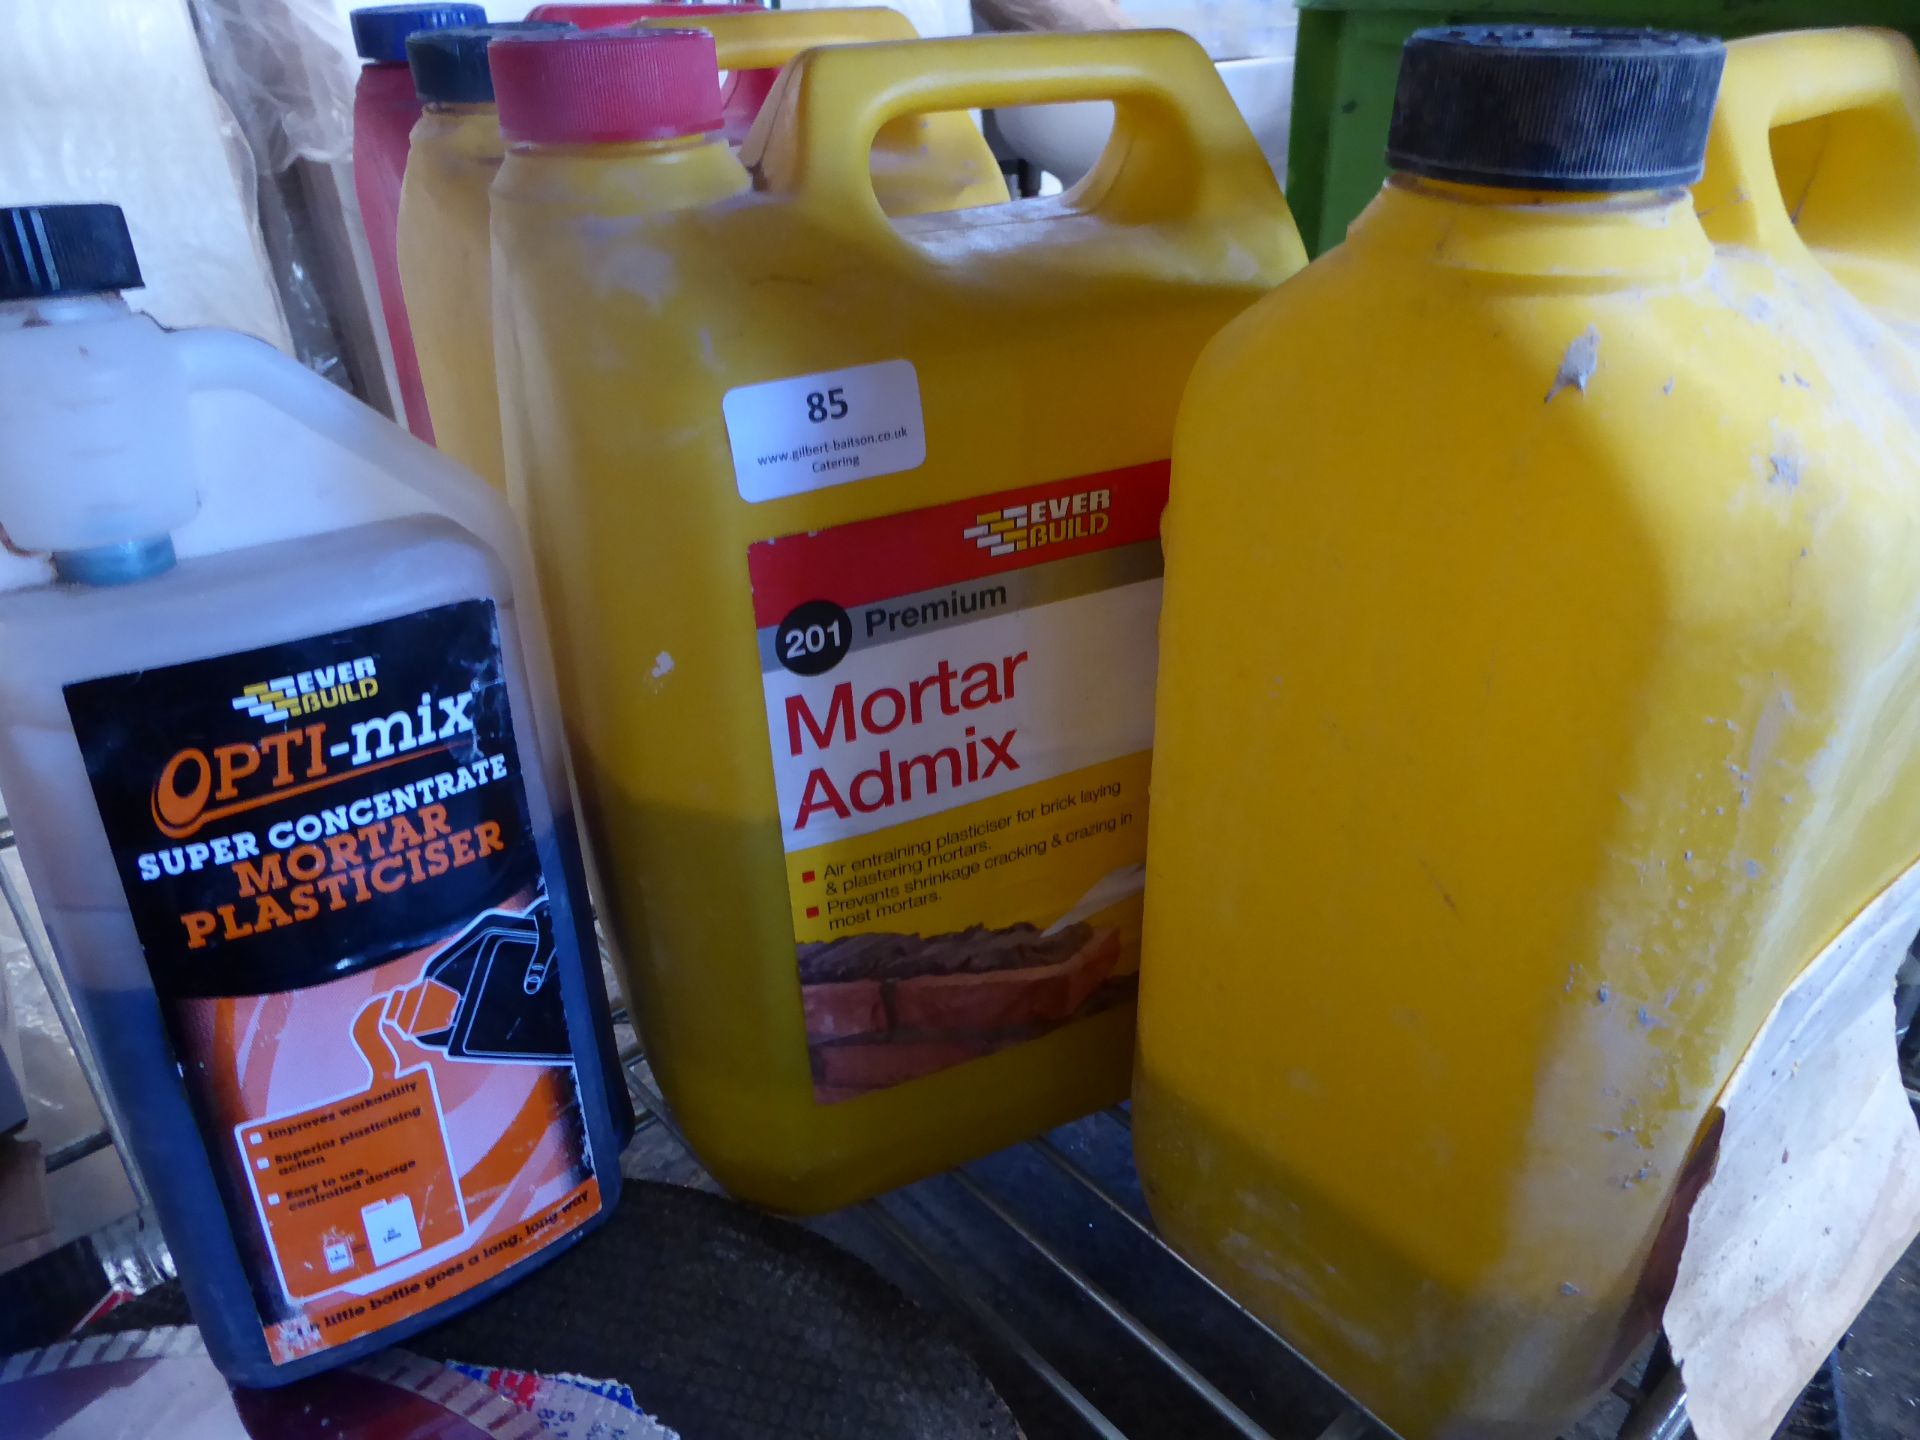 * quantity of mortar admix and plasticiser (5x part bottles)